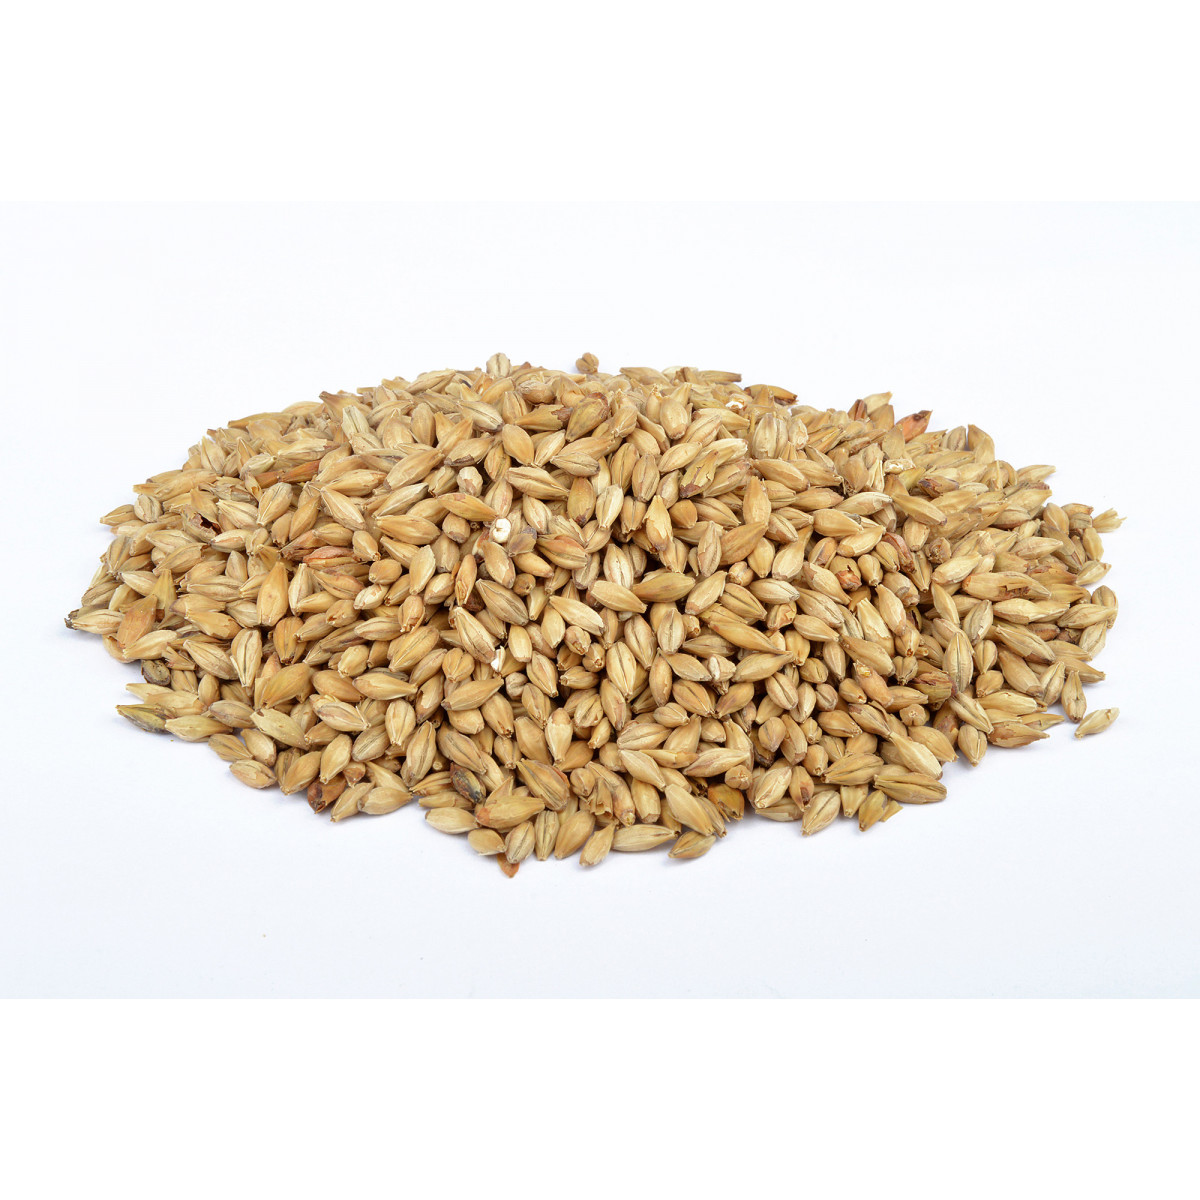 Weyermann® organic pale ale malt 5,5-7,5 EBC 25 kg